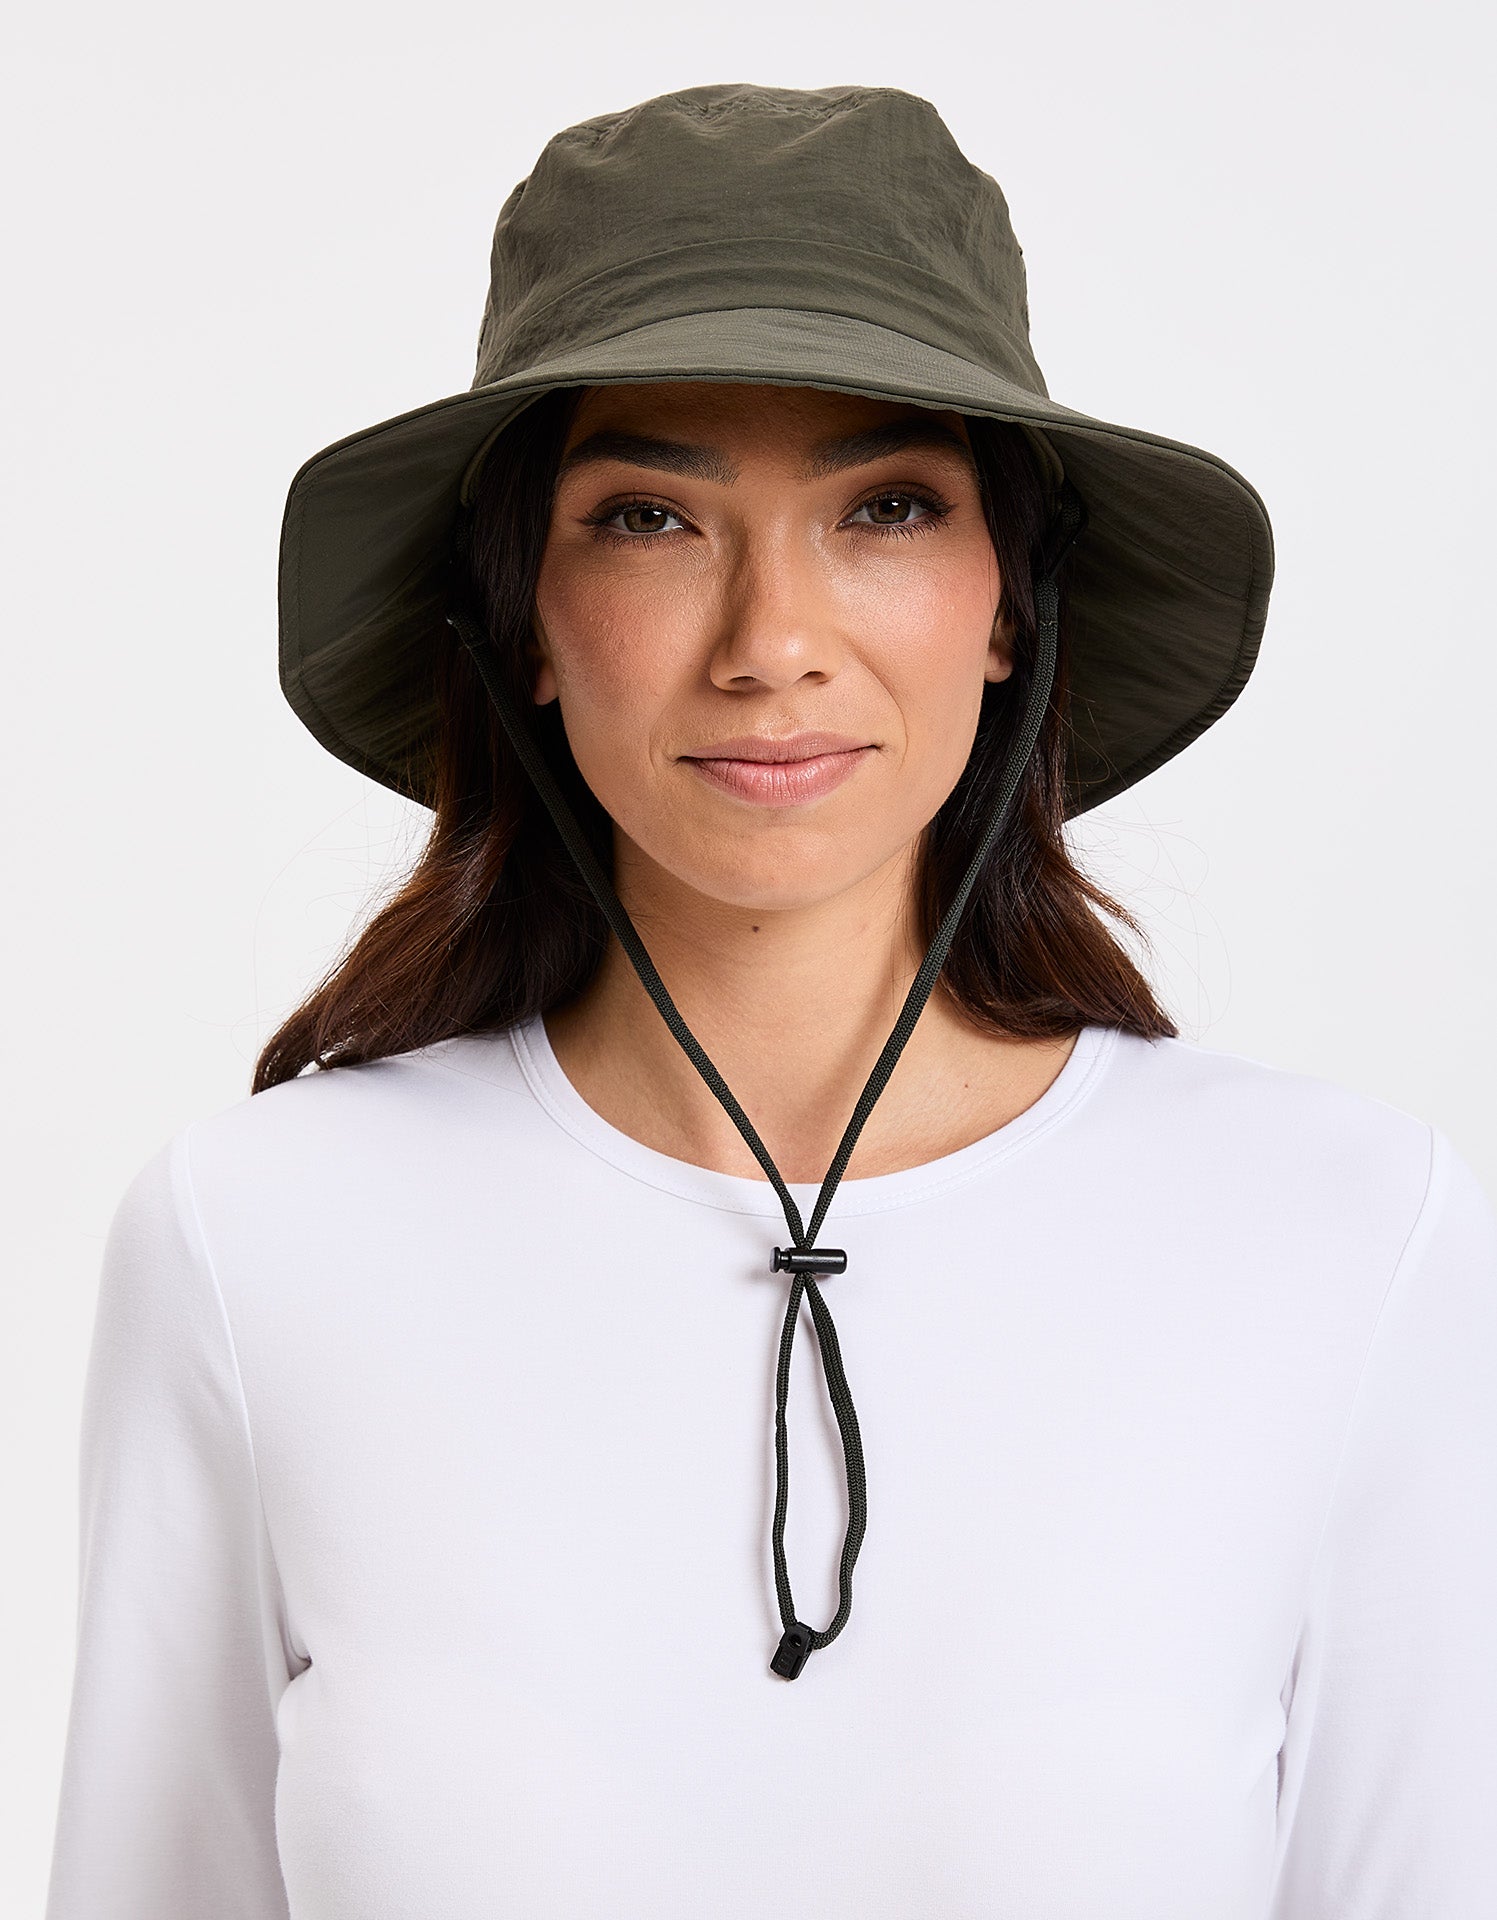 Expedition Sun Hat Upf50+, Women's Sun Protective Hat | Solbari Khaki